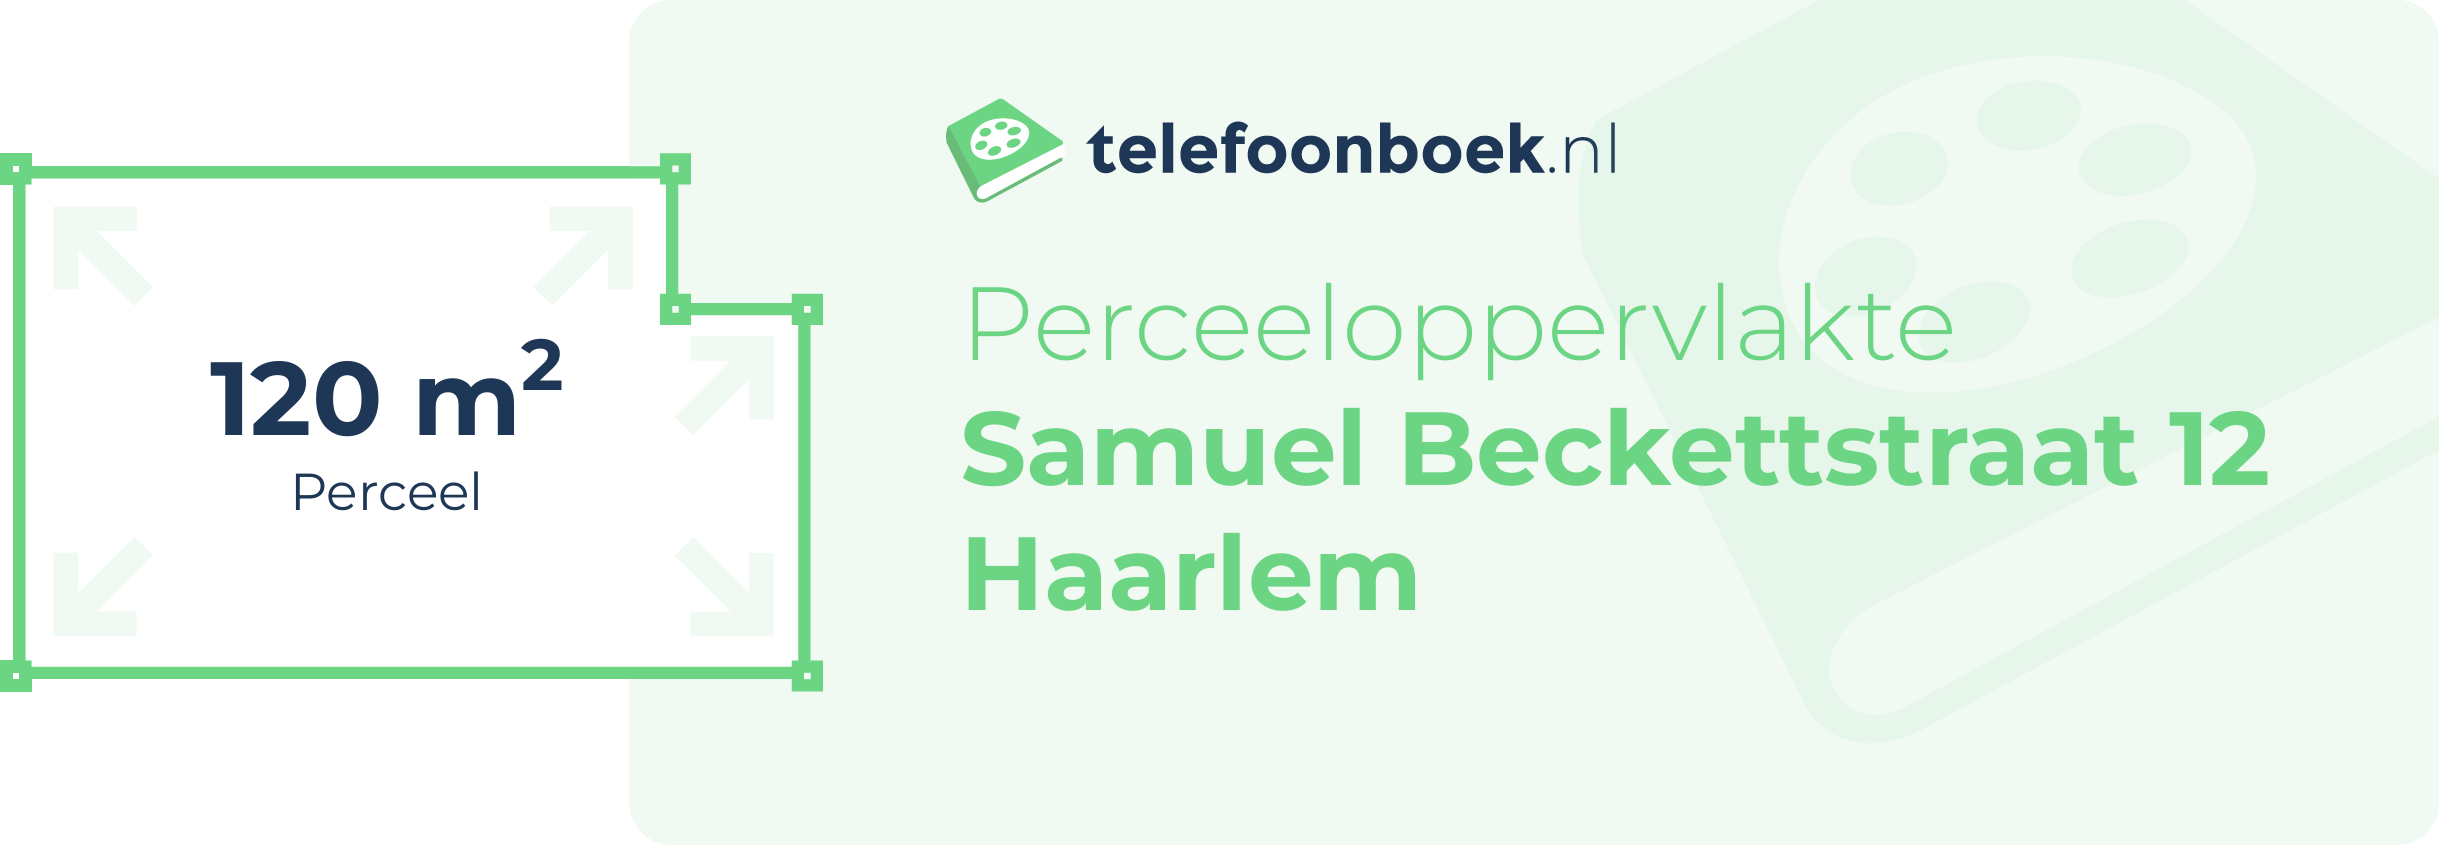 Perceeloppervlakte Samuel Beckettstraat 12 Haarlem